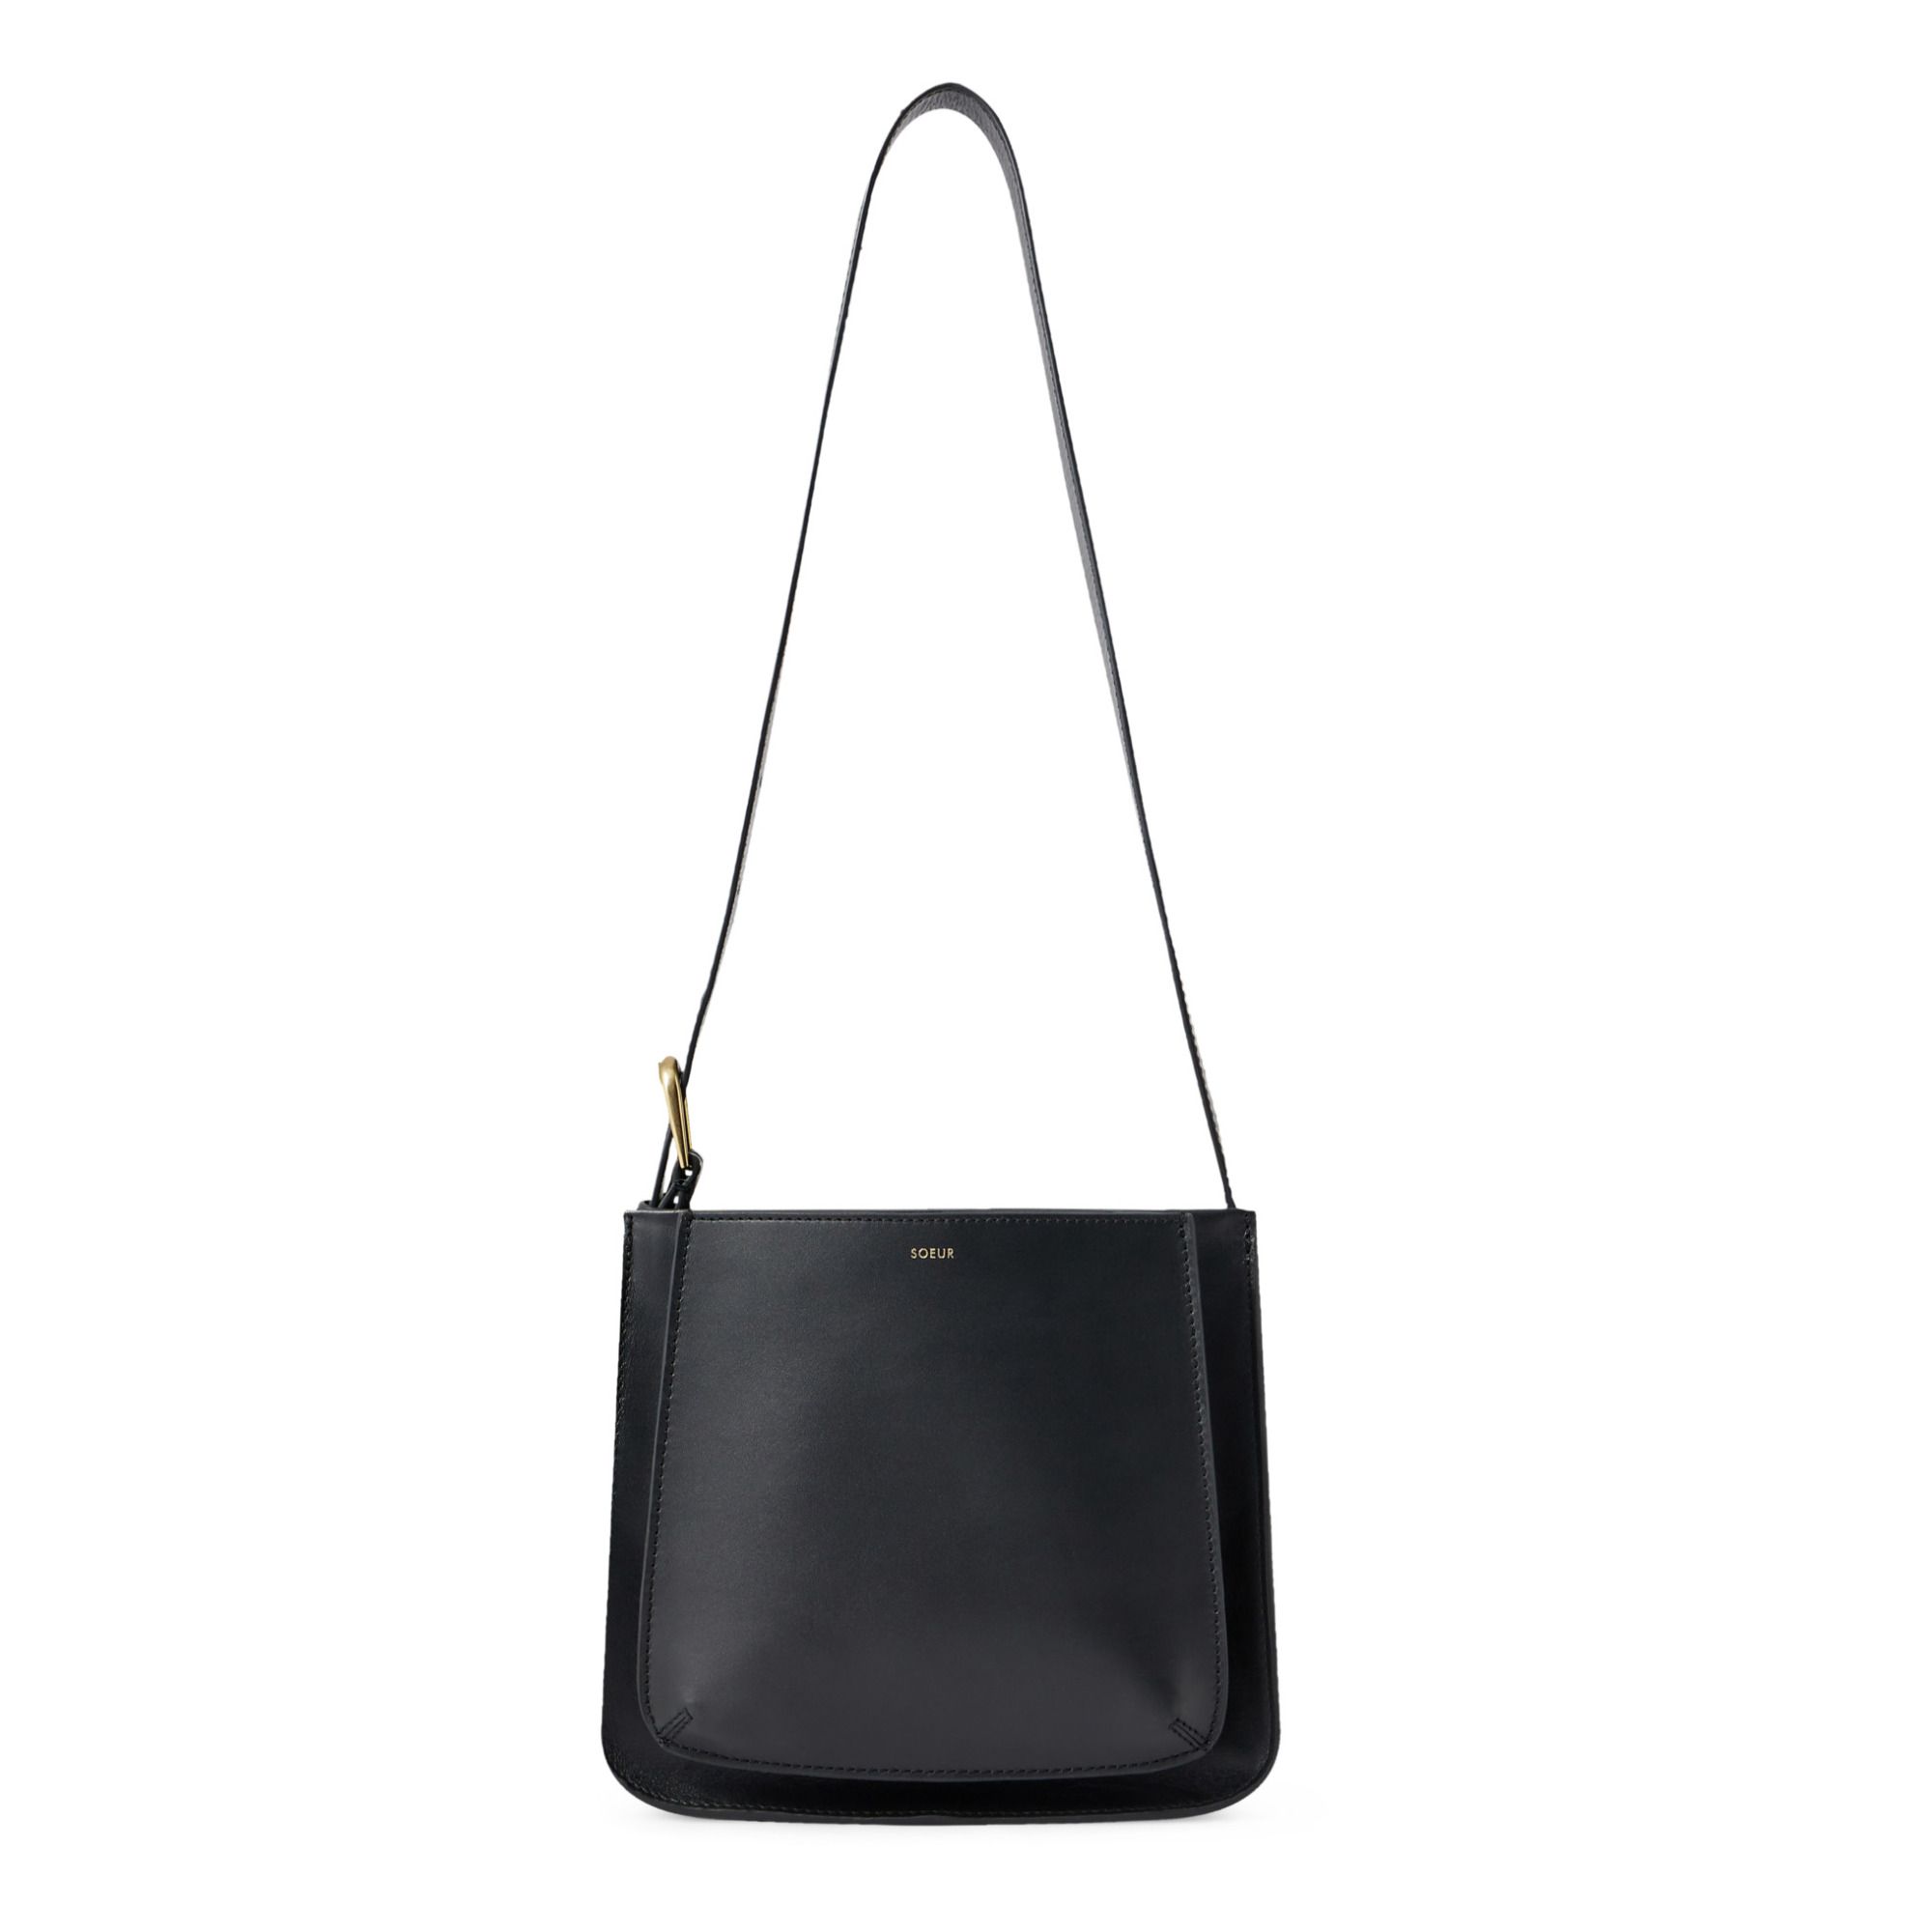 Soeur - Valence Leather Bag - Black | Smallable